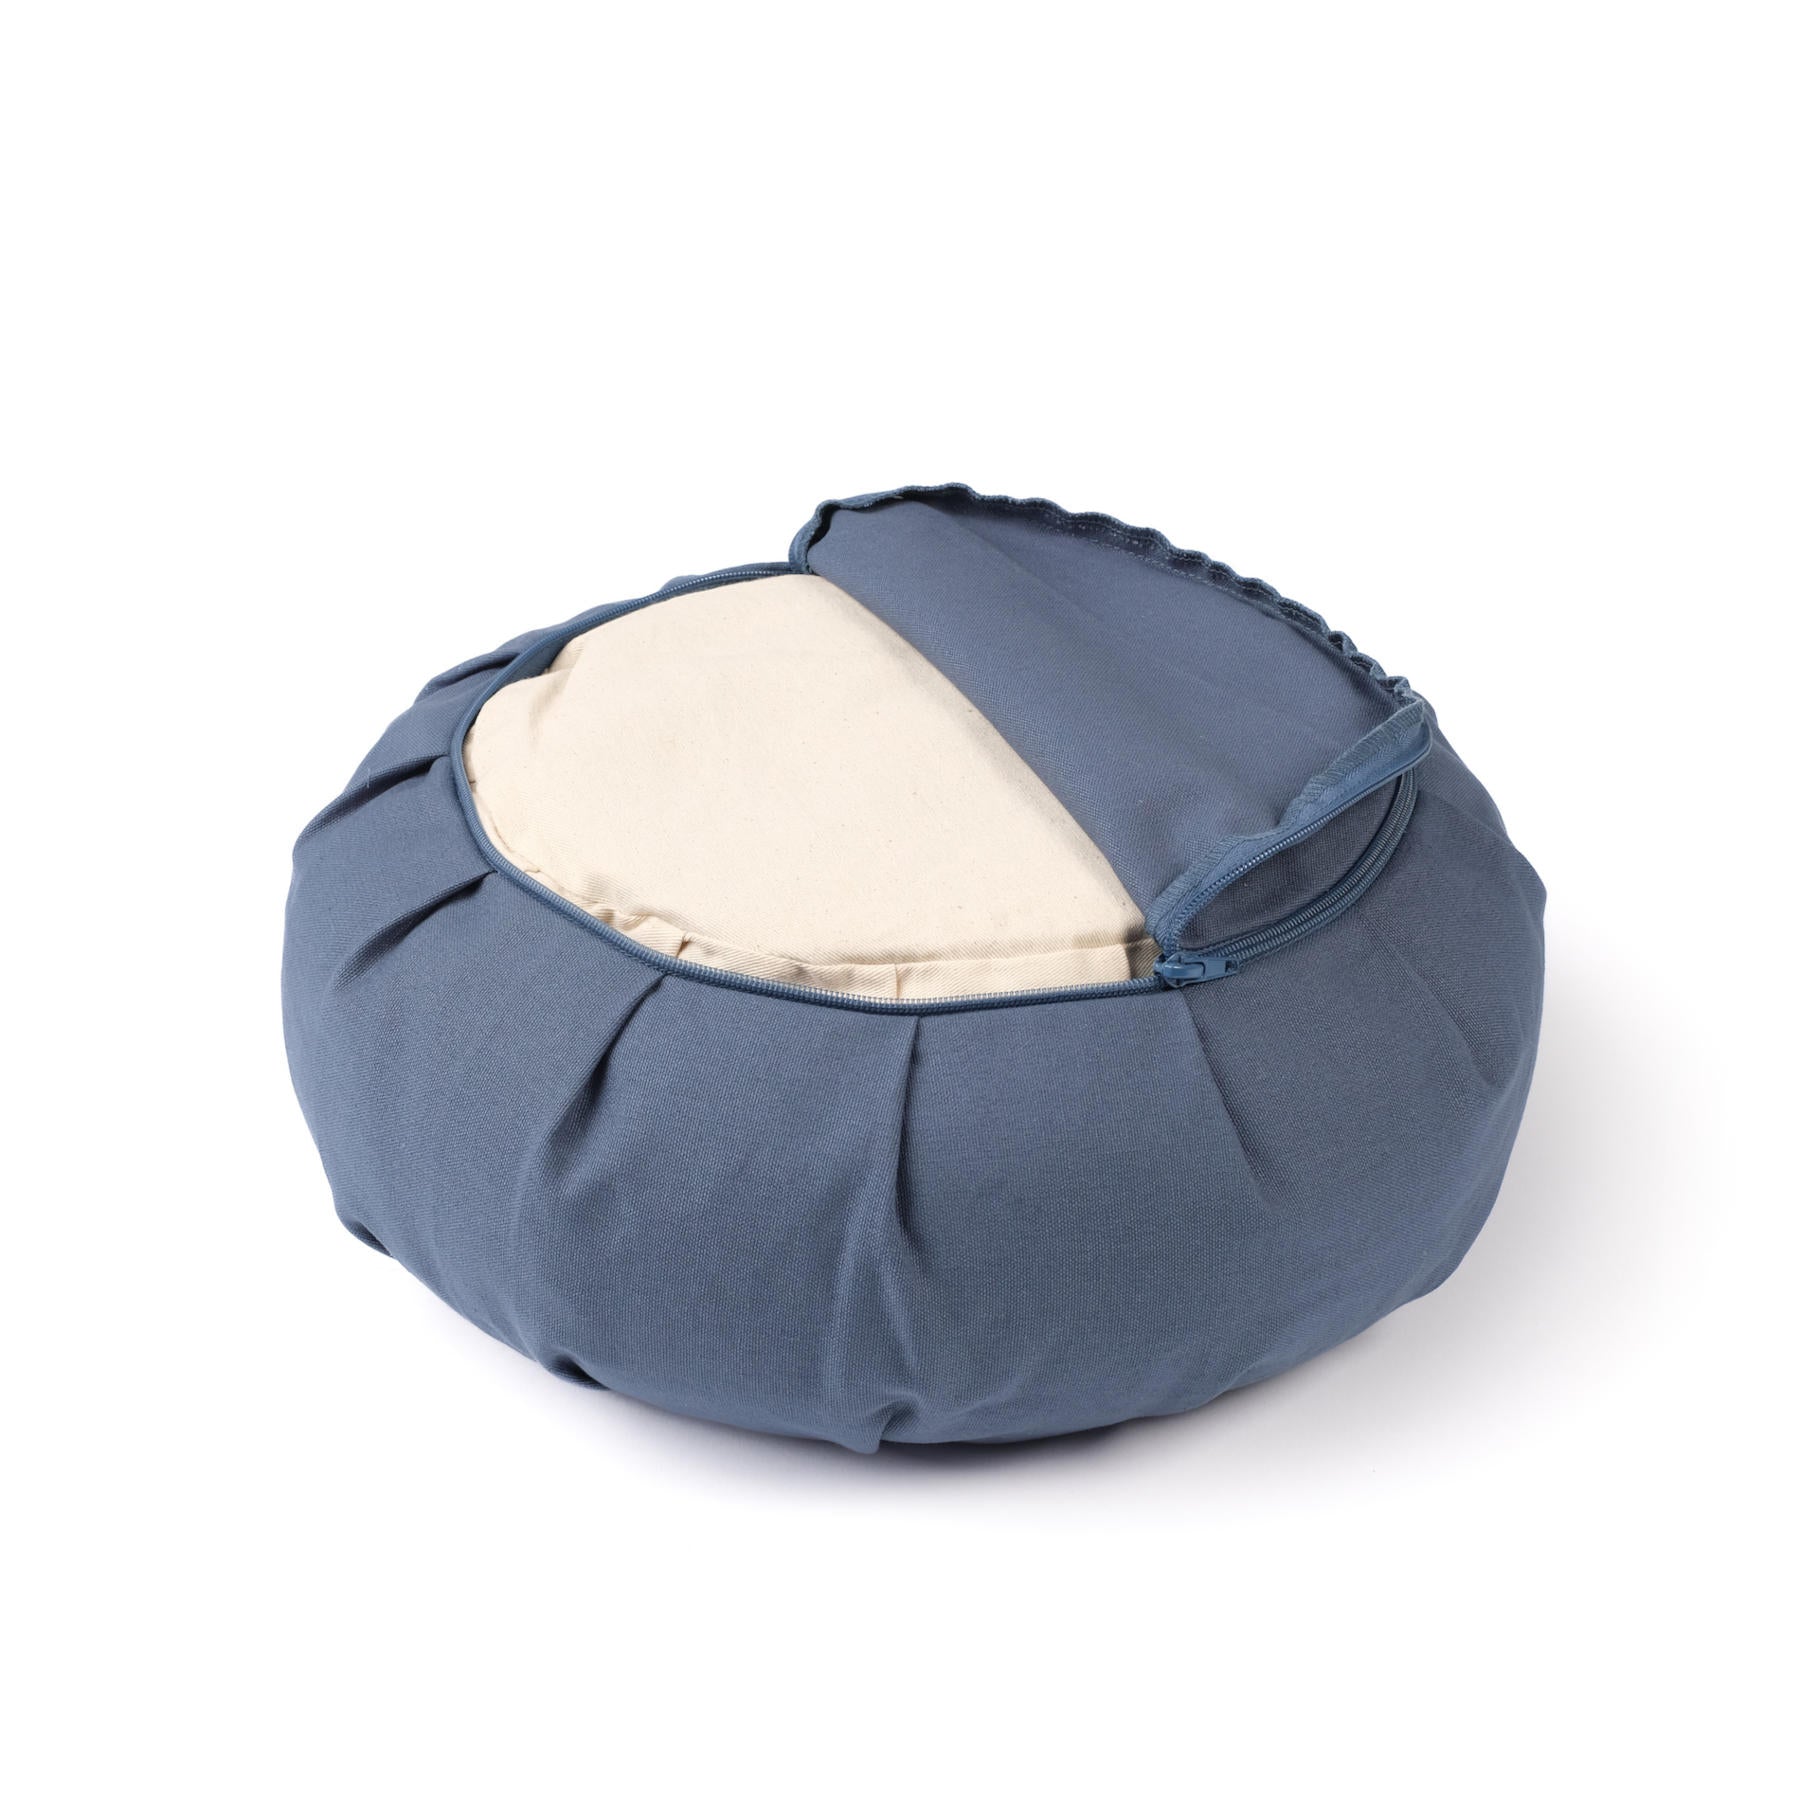 Coussin de méditation Zafu en coton bio avec imprimé doré Mandala OM blue-sky